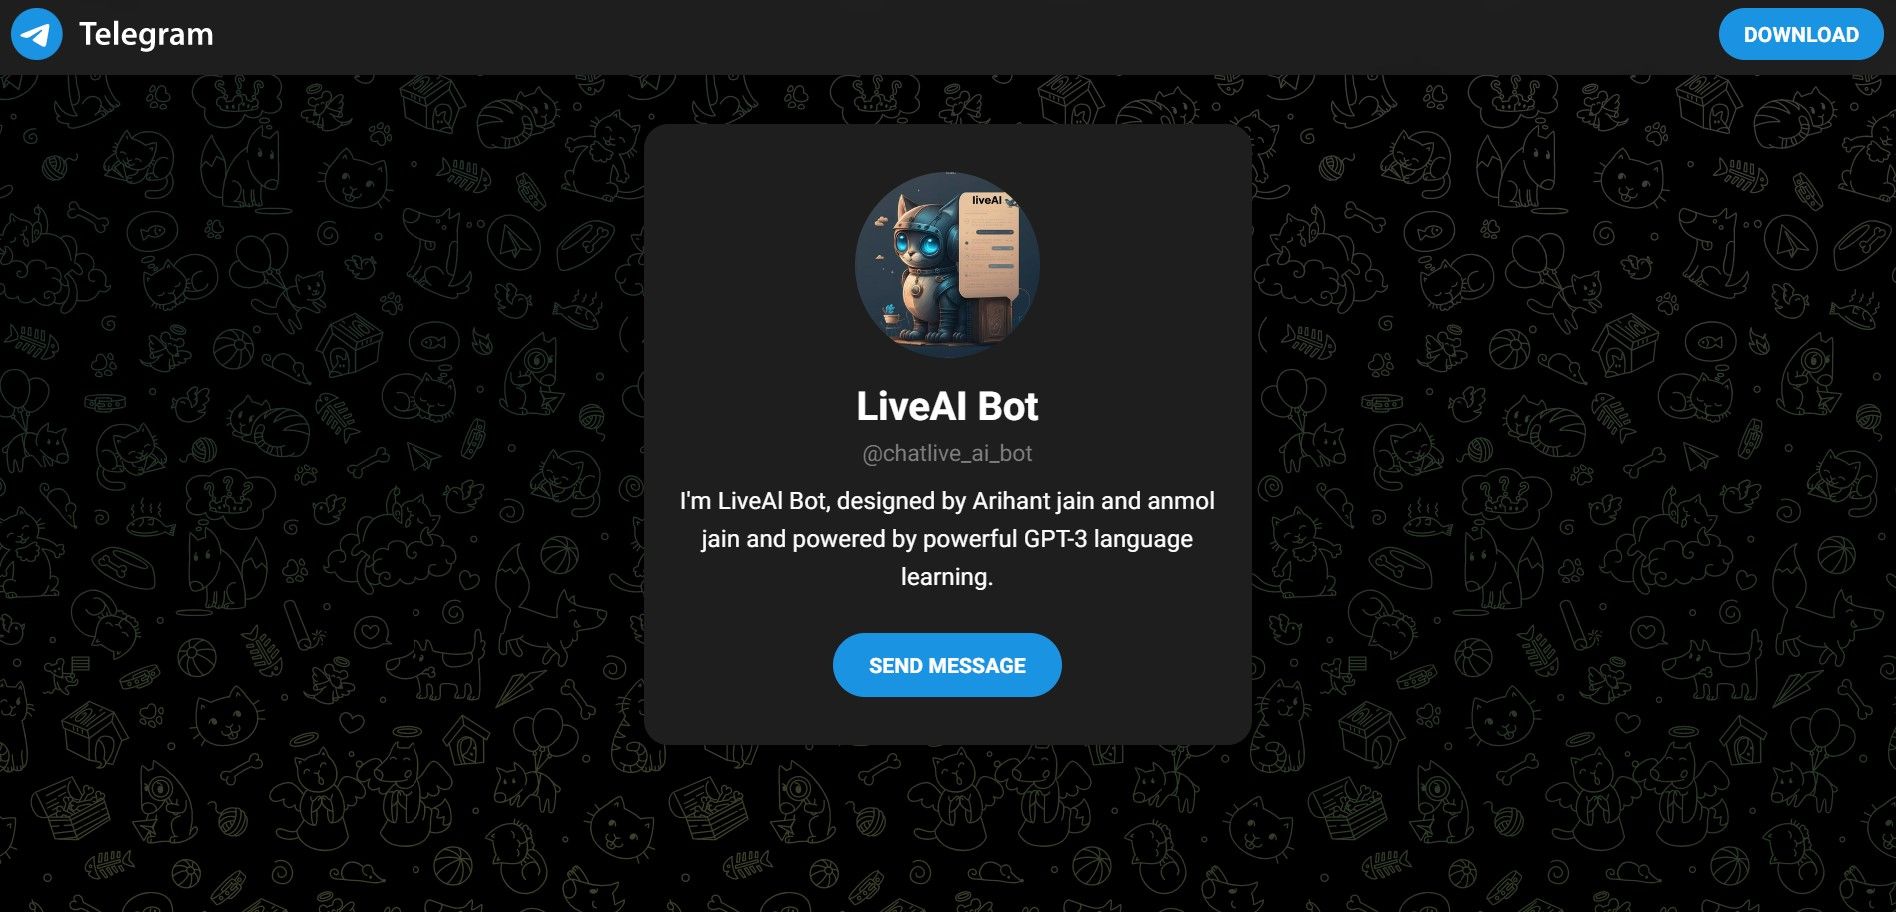 Post: LiveAI Bot